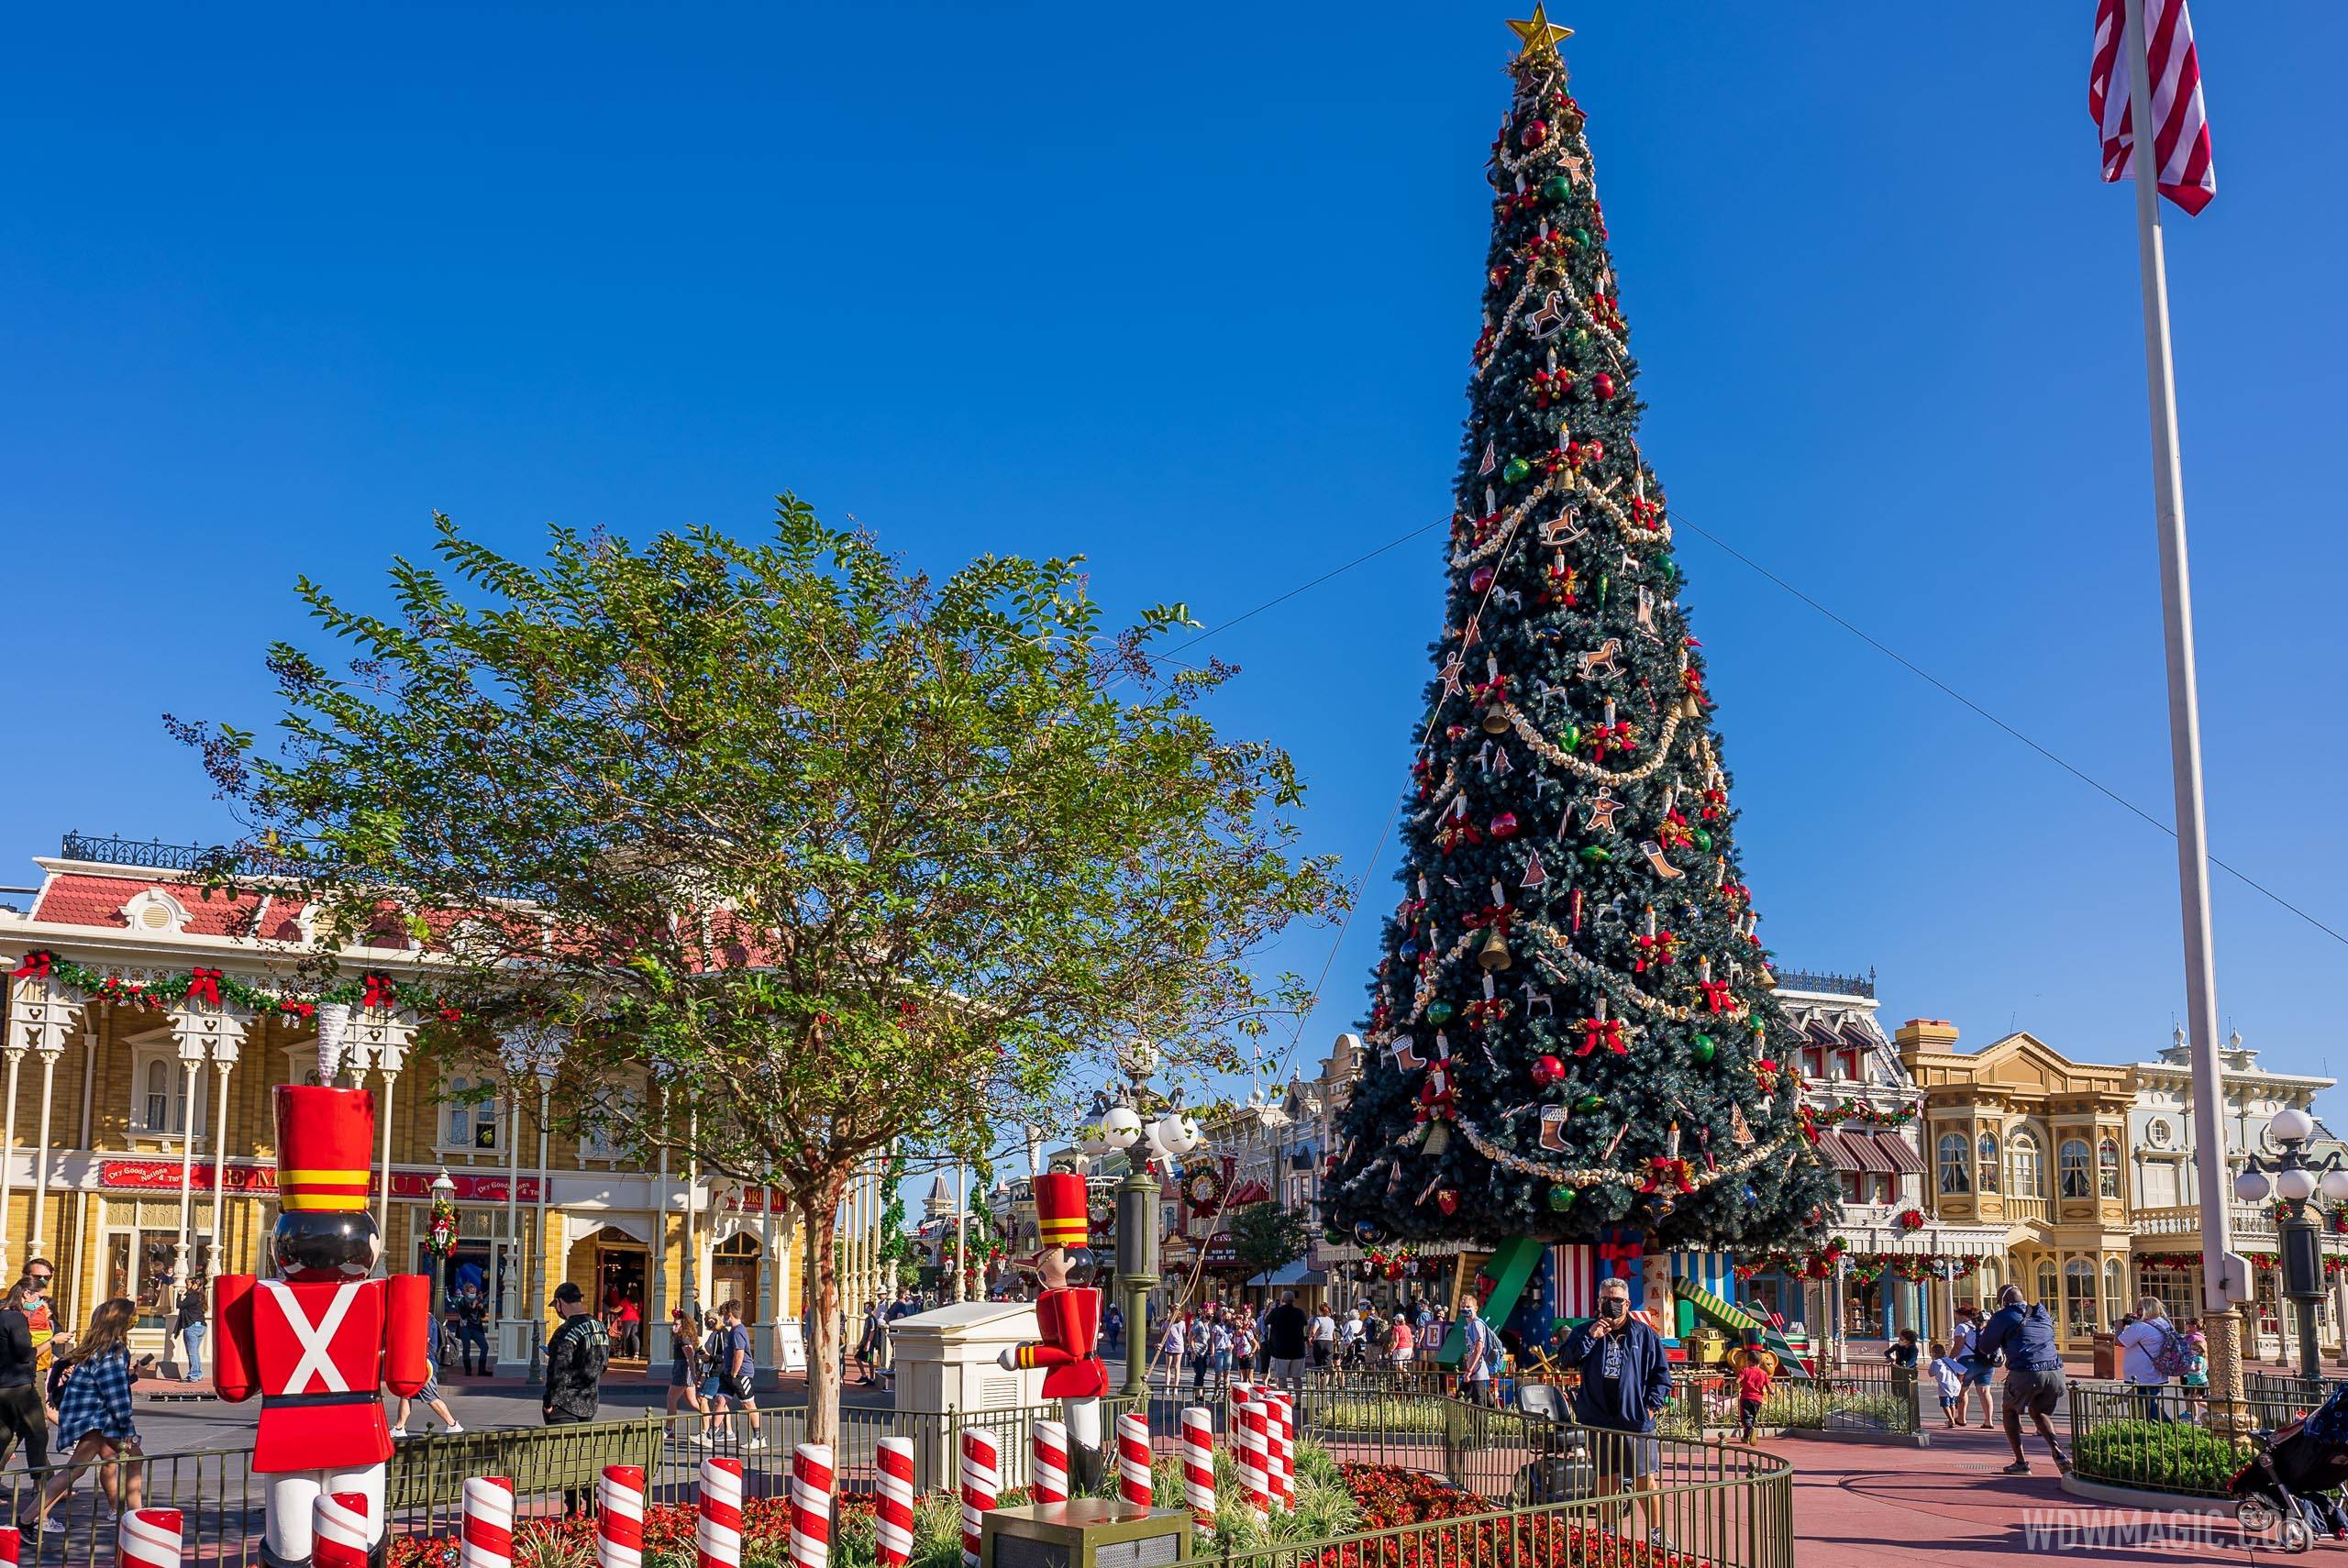 Magic Kingdom Christmas Holiday decorations 2020